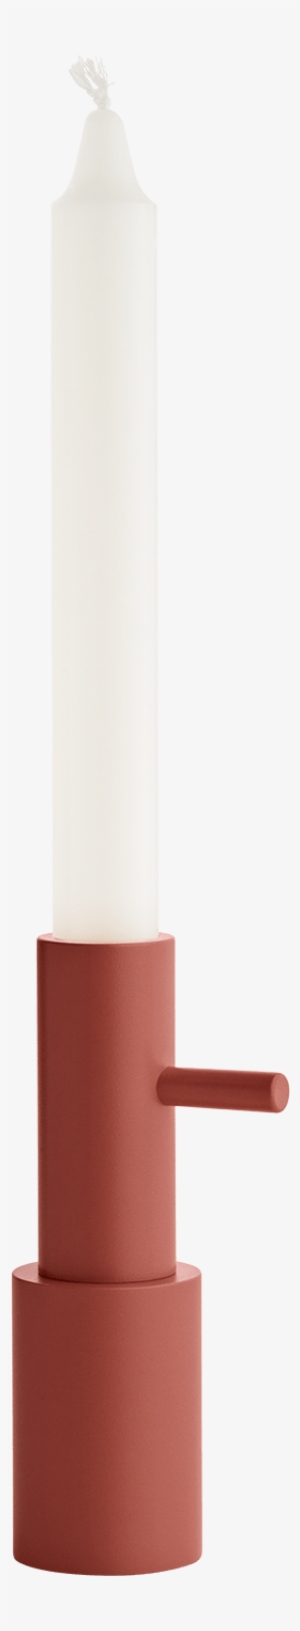 Jaime Hayon Candleholder Single 2 Terracotta - Candelabra